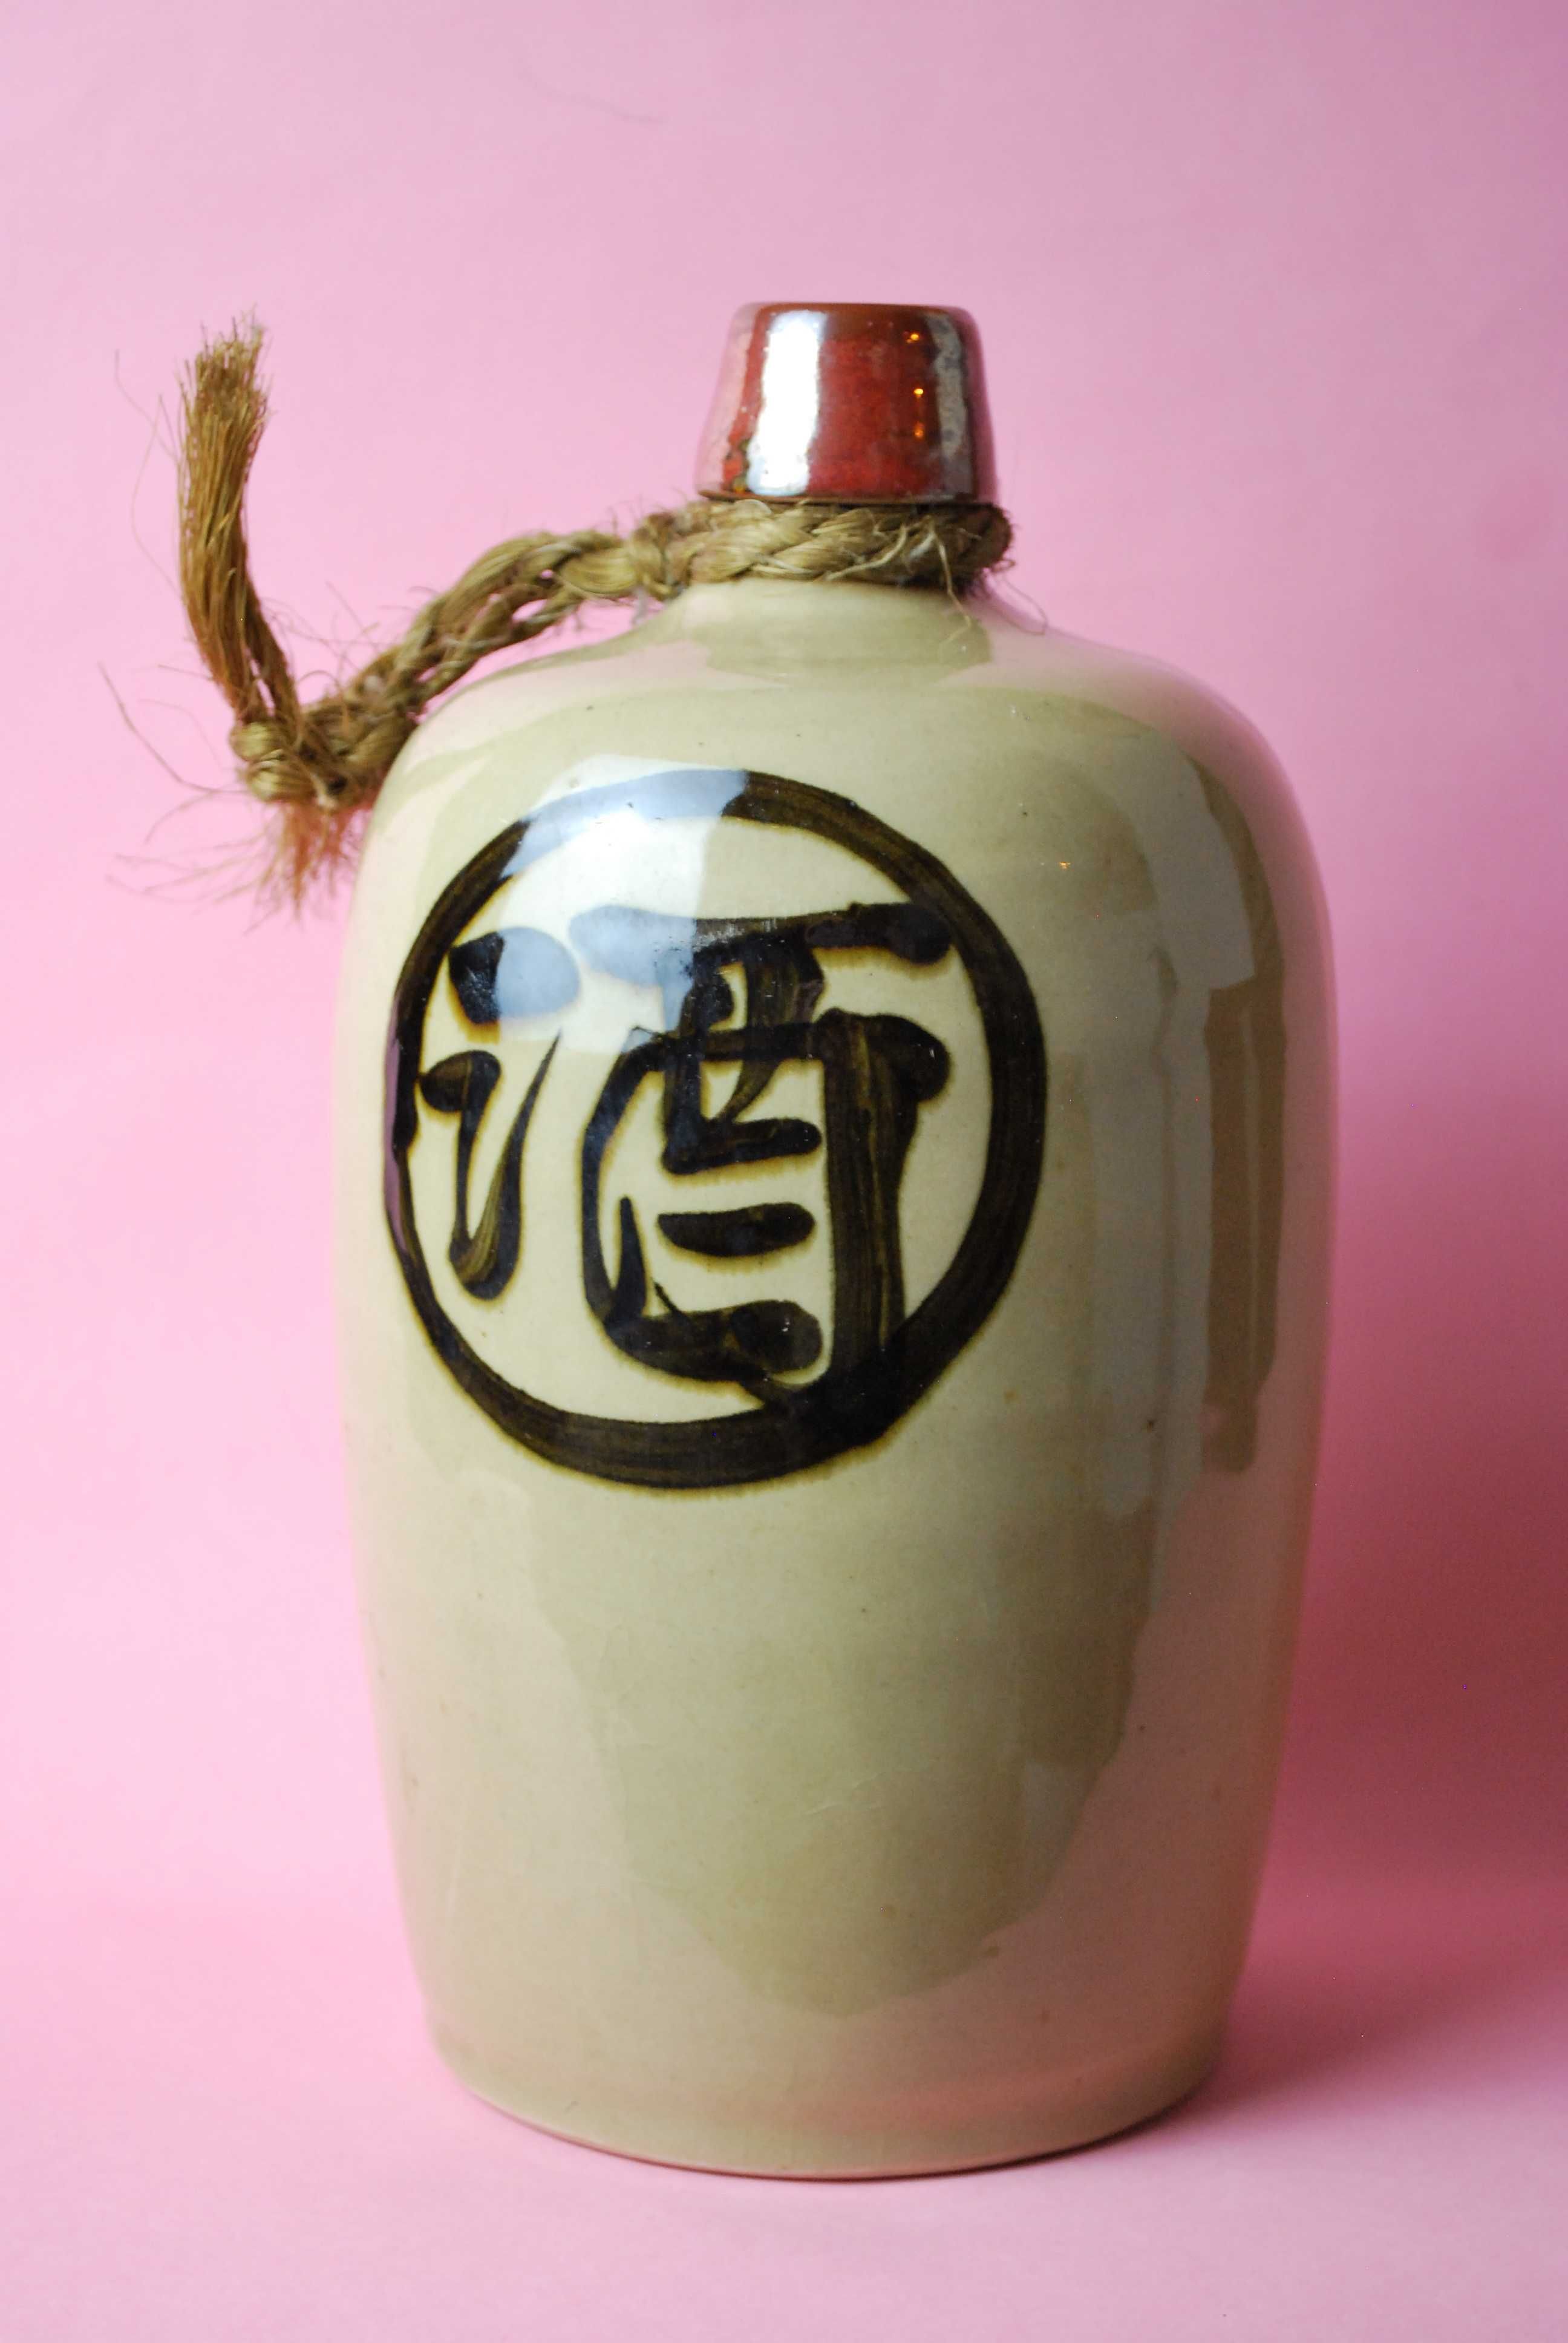 butla sake sos sojowy vintage retro etno azja orient